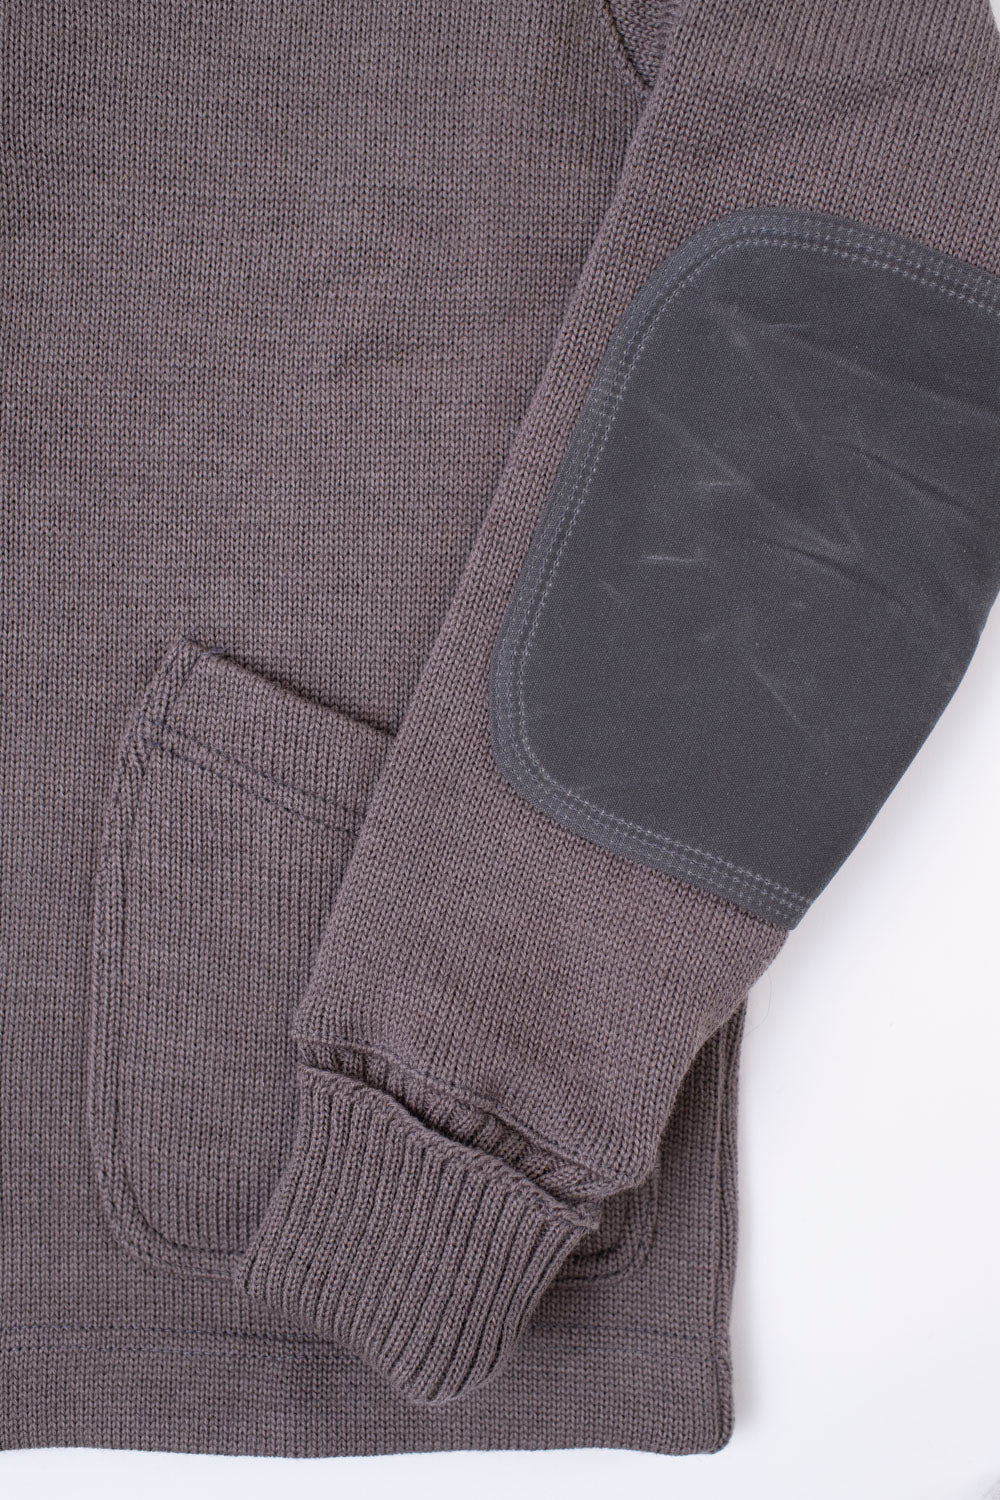 James Dant x Dehen - Shawl Sweater Coat 2.0 - Smoke, Charcoal